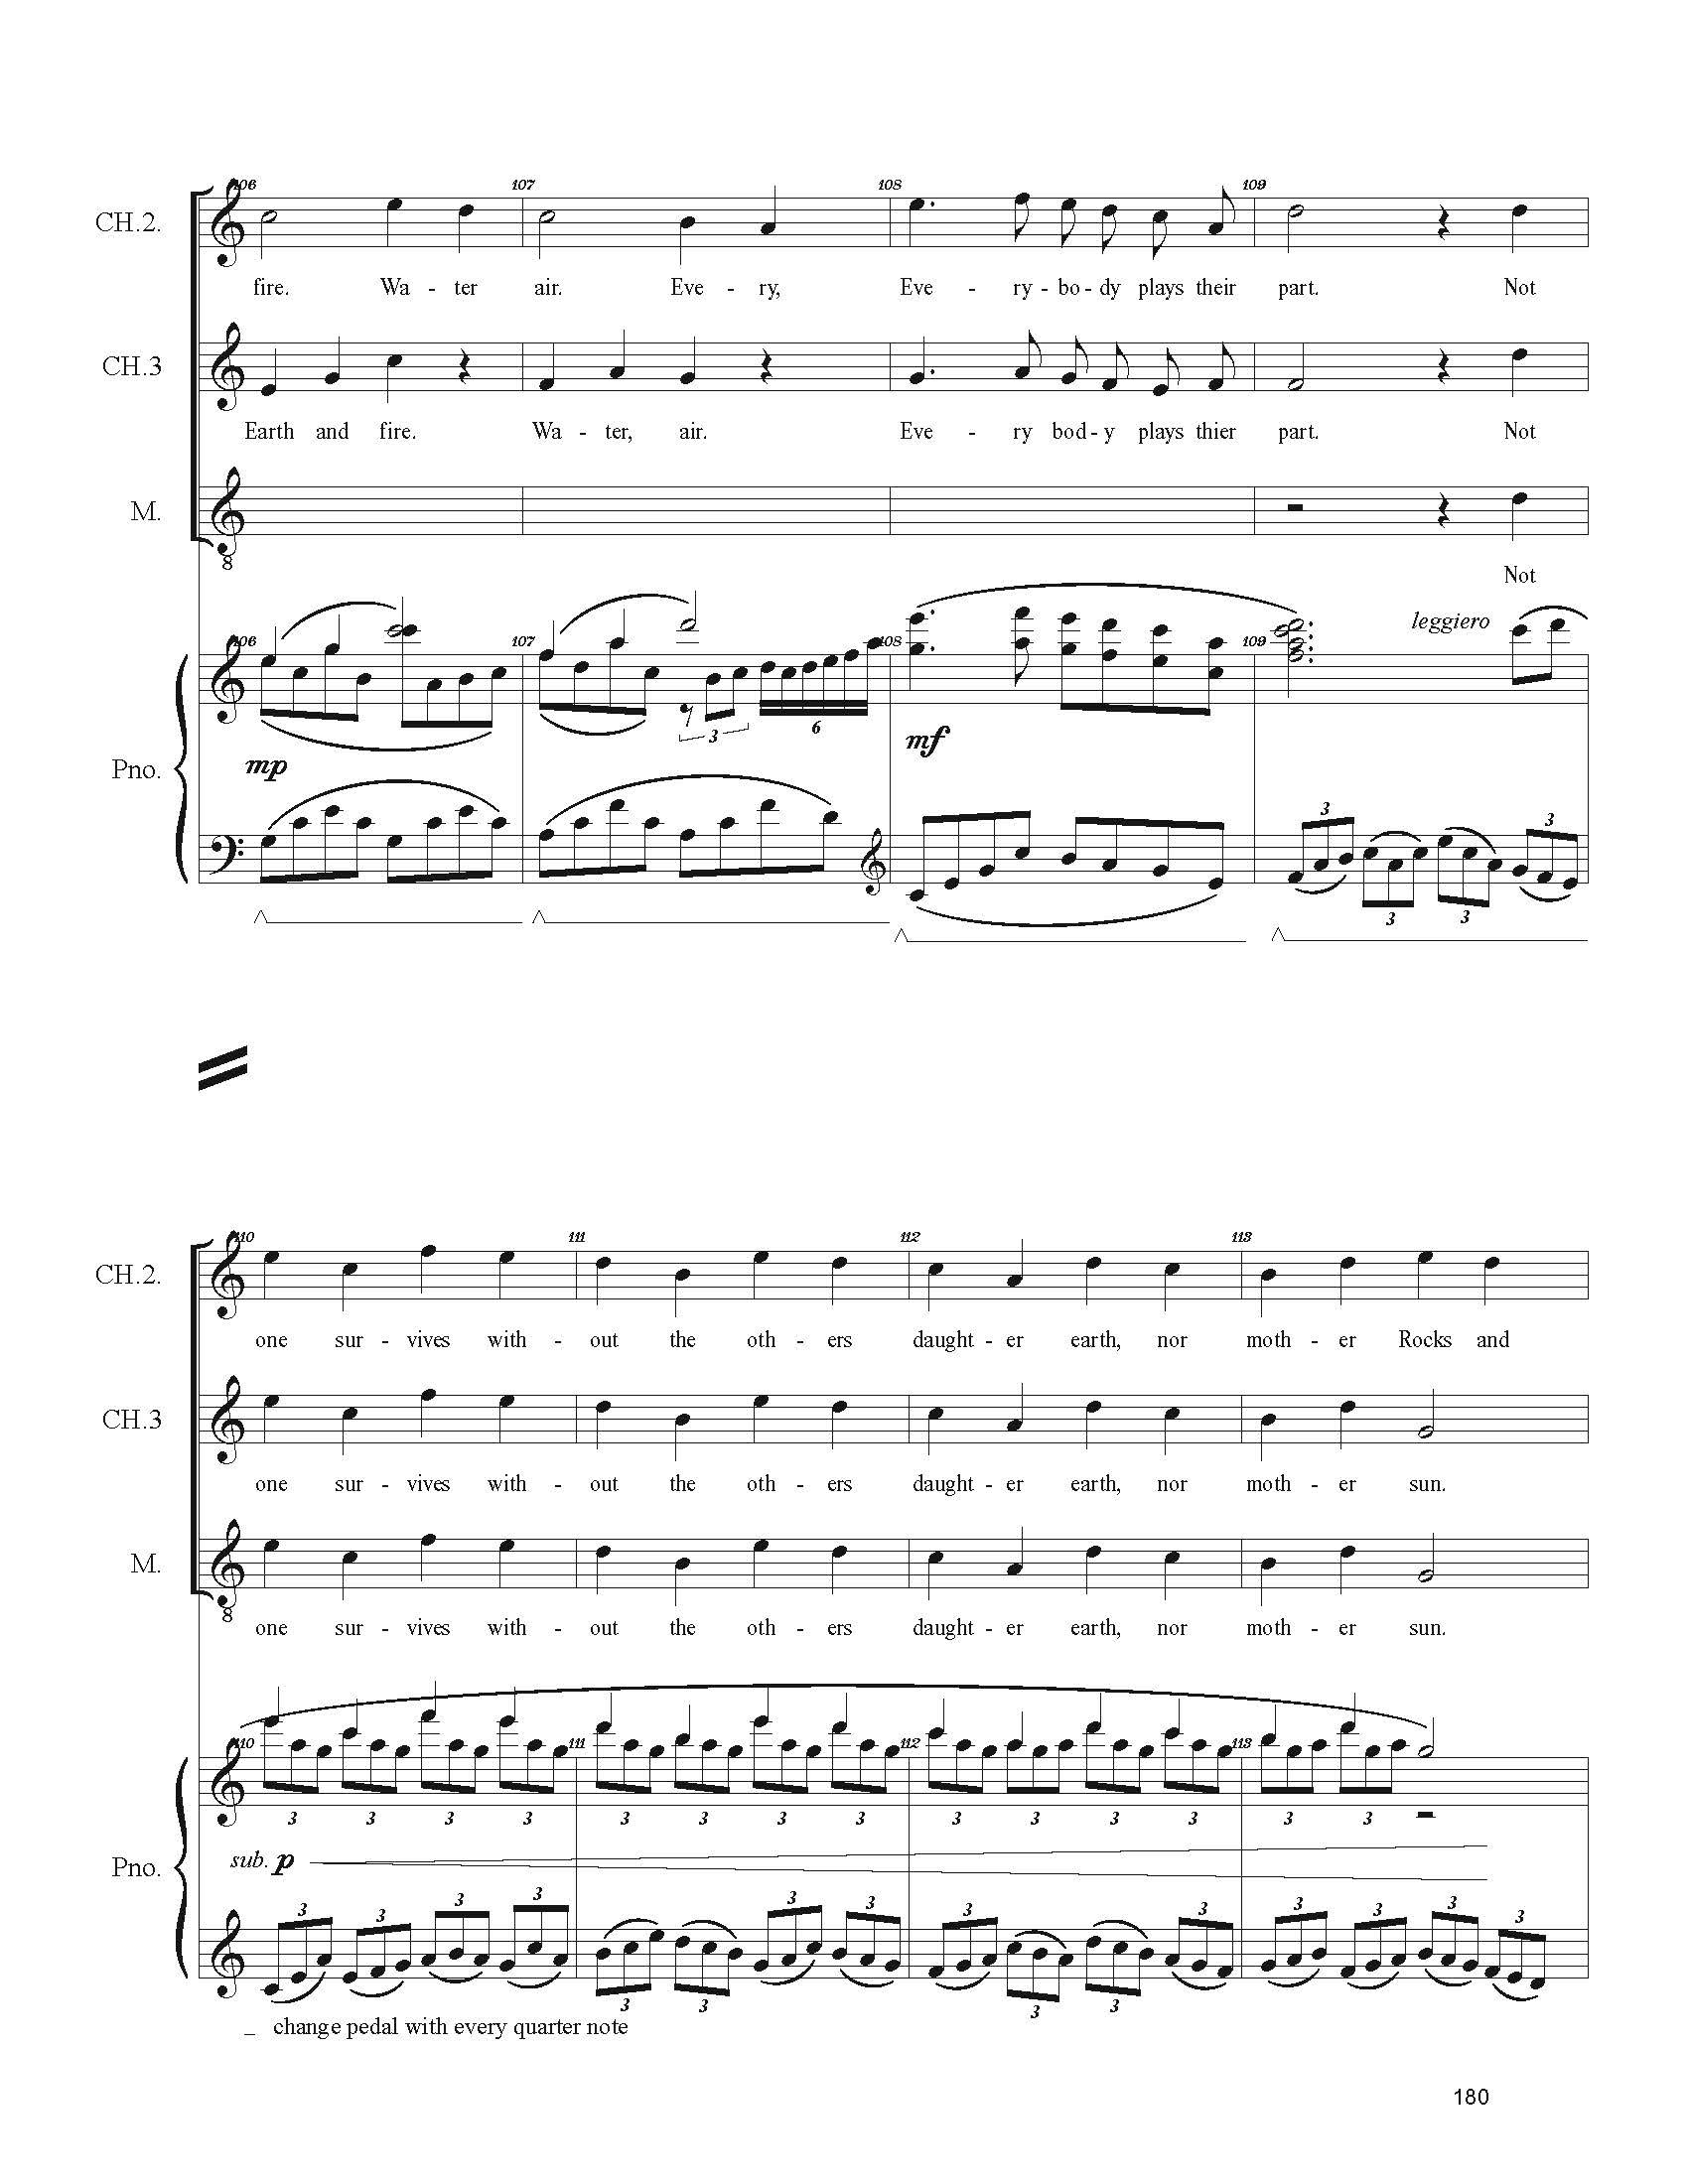 FULL PIANO VOCAL SCORE DRAFT 1 - Score_Page_180.jpg